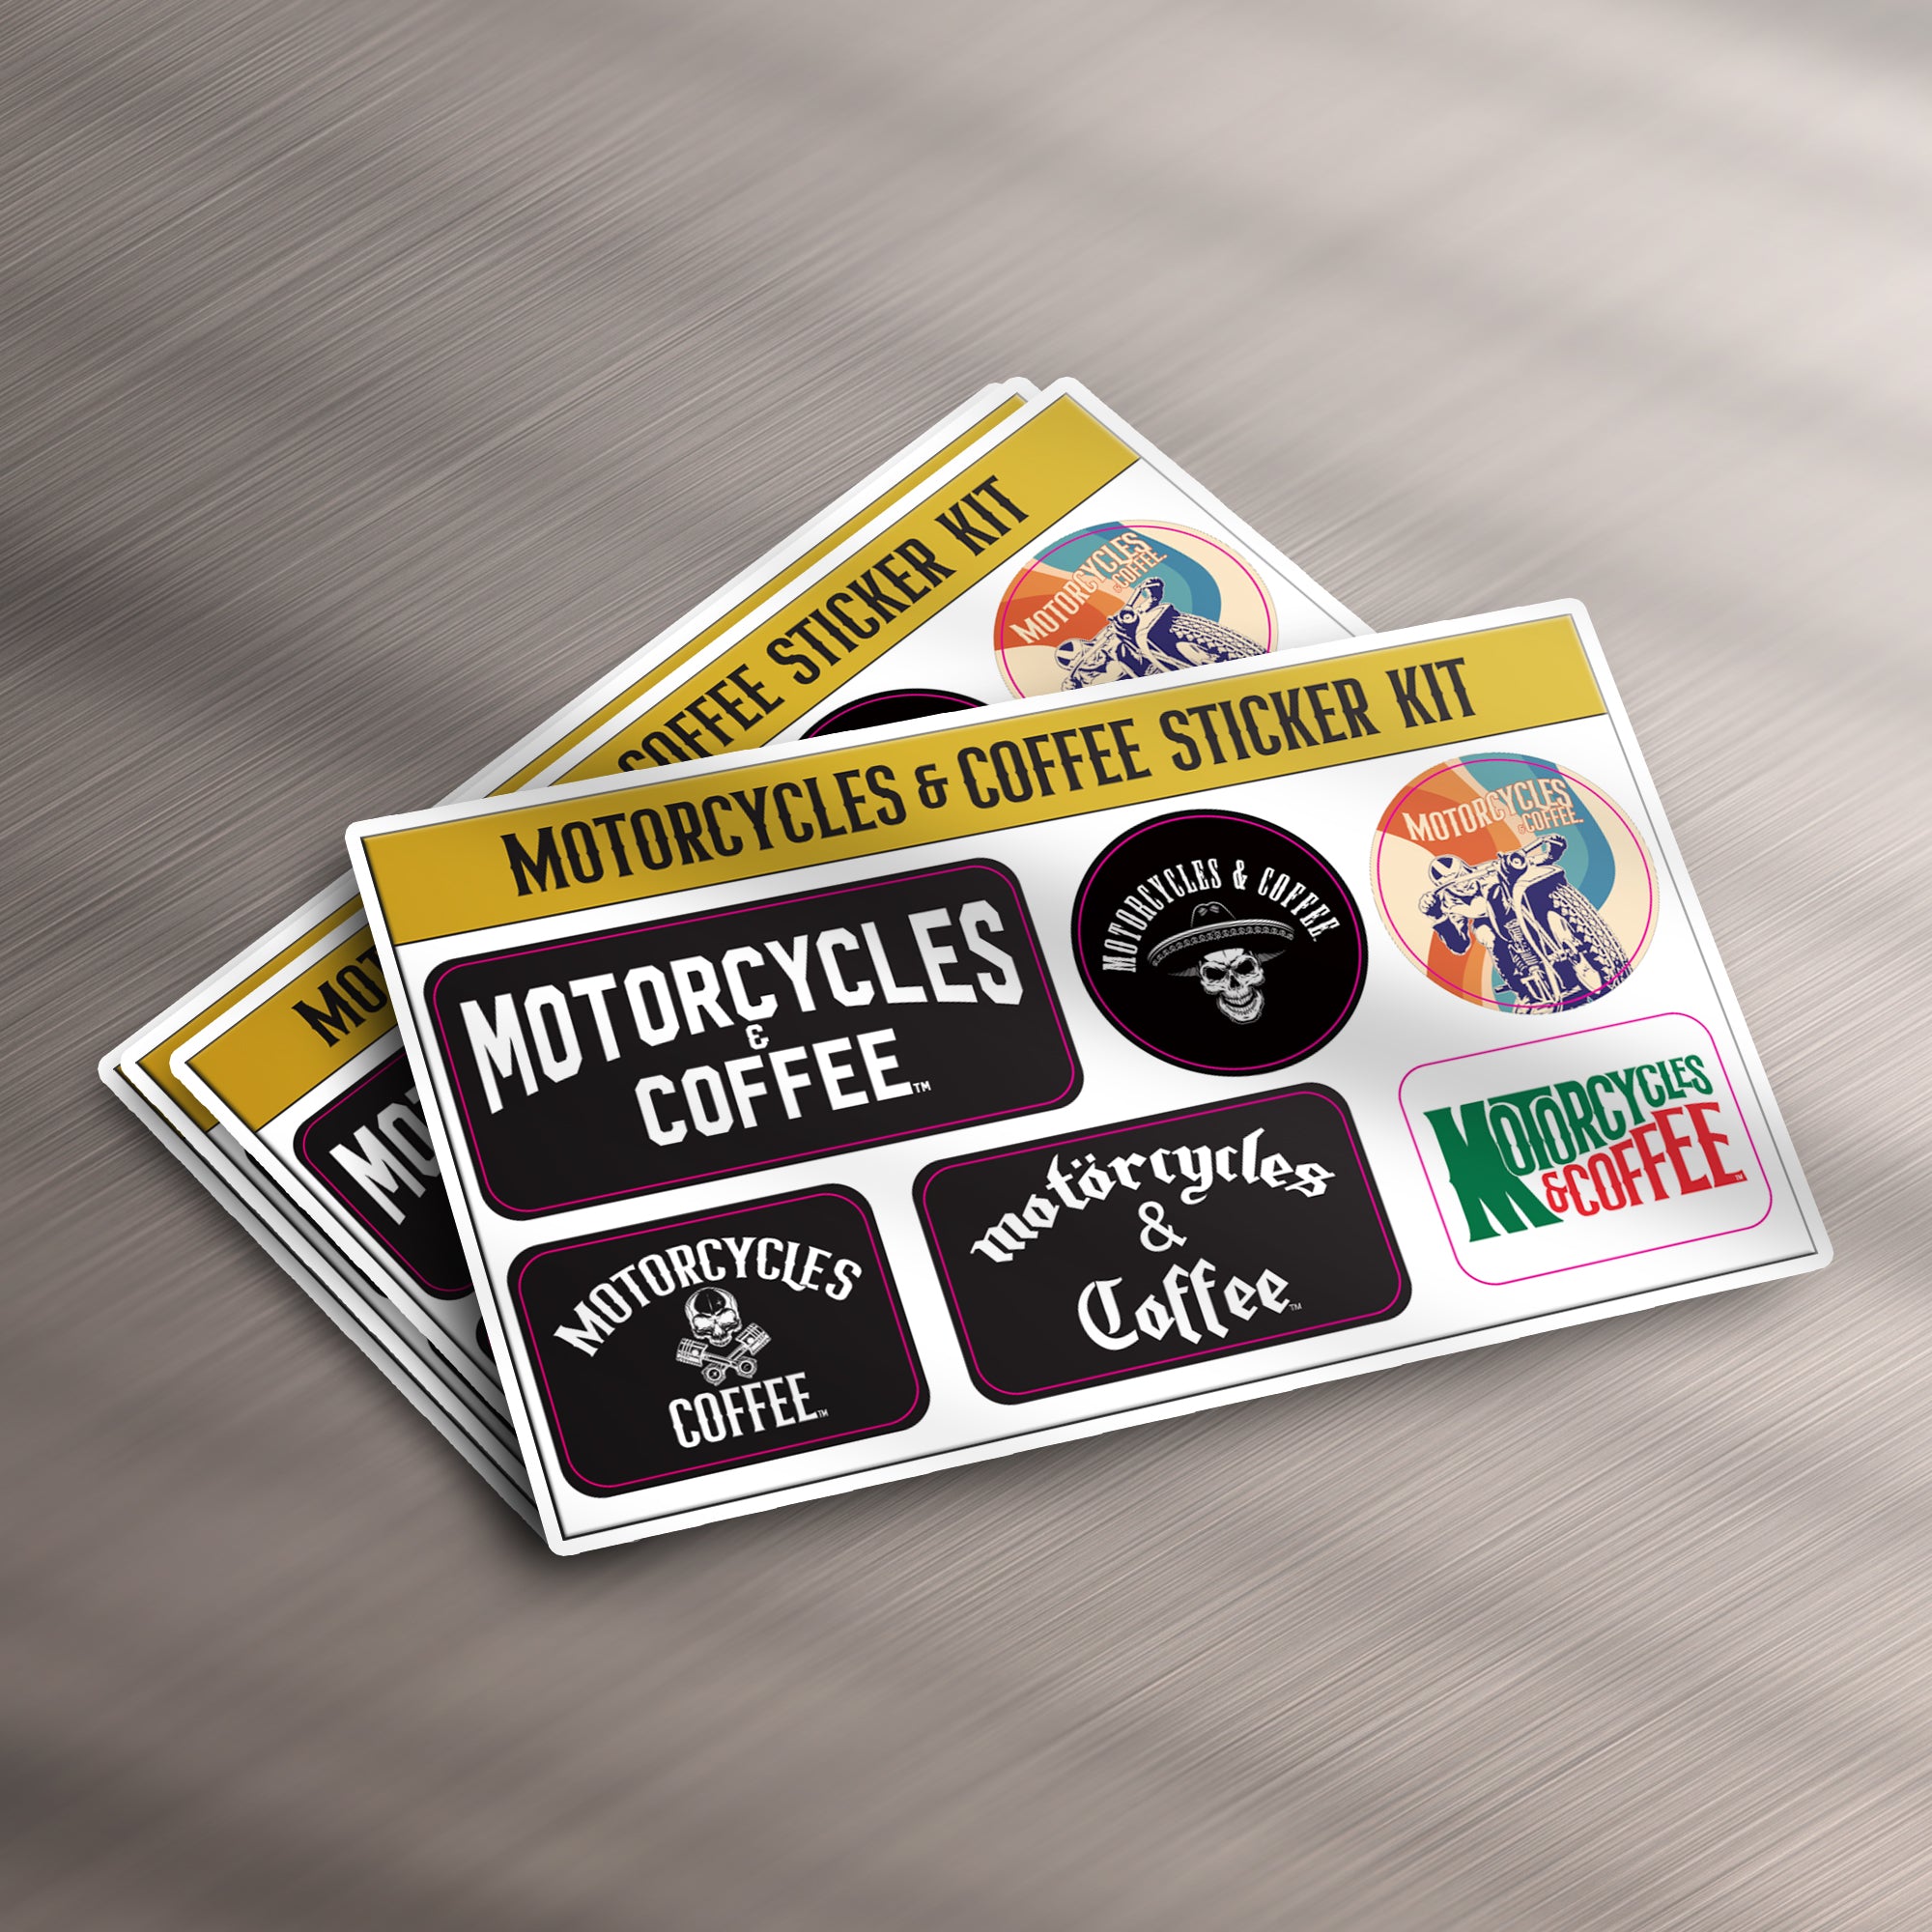 Motorcycles & Coffee - Mini Sticker Kit